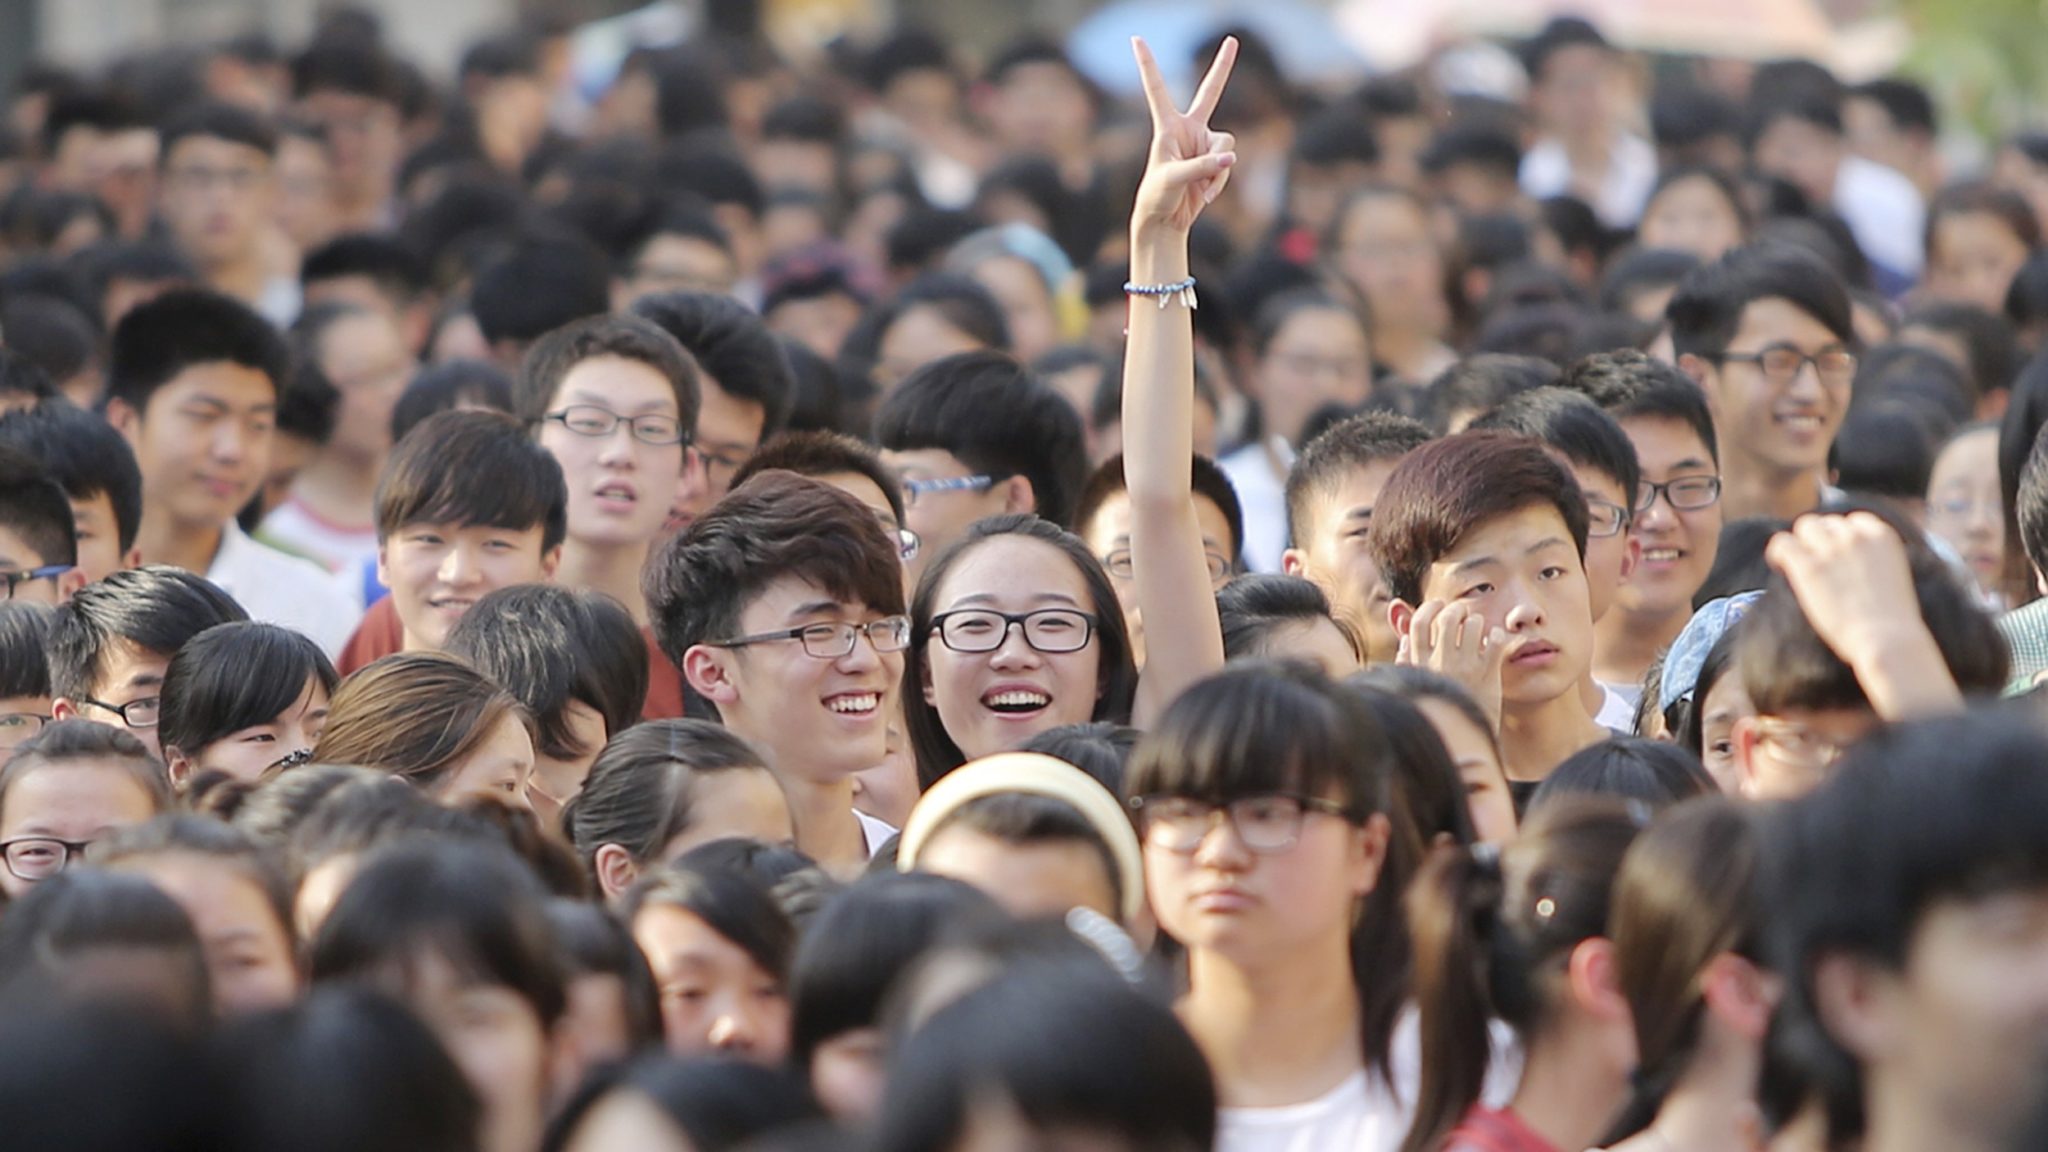 Millennials in China